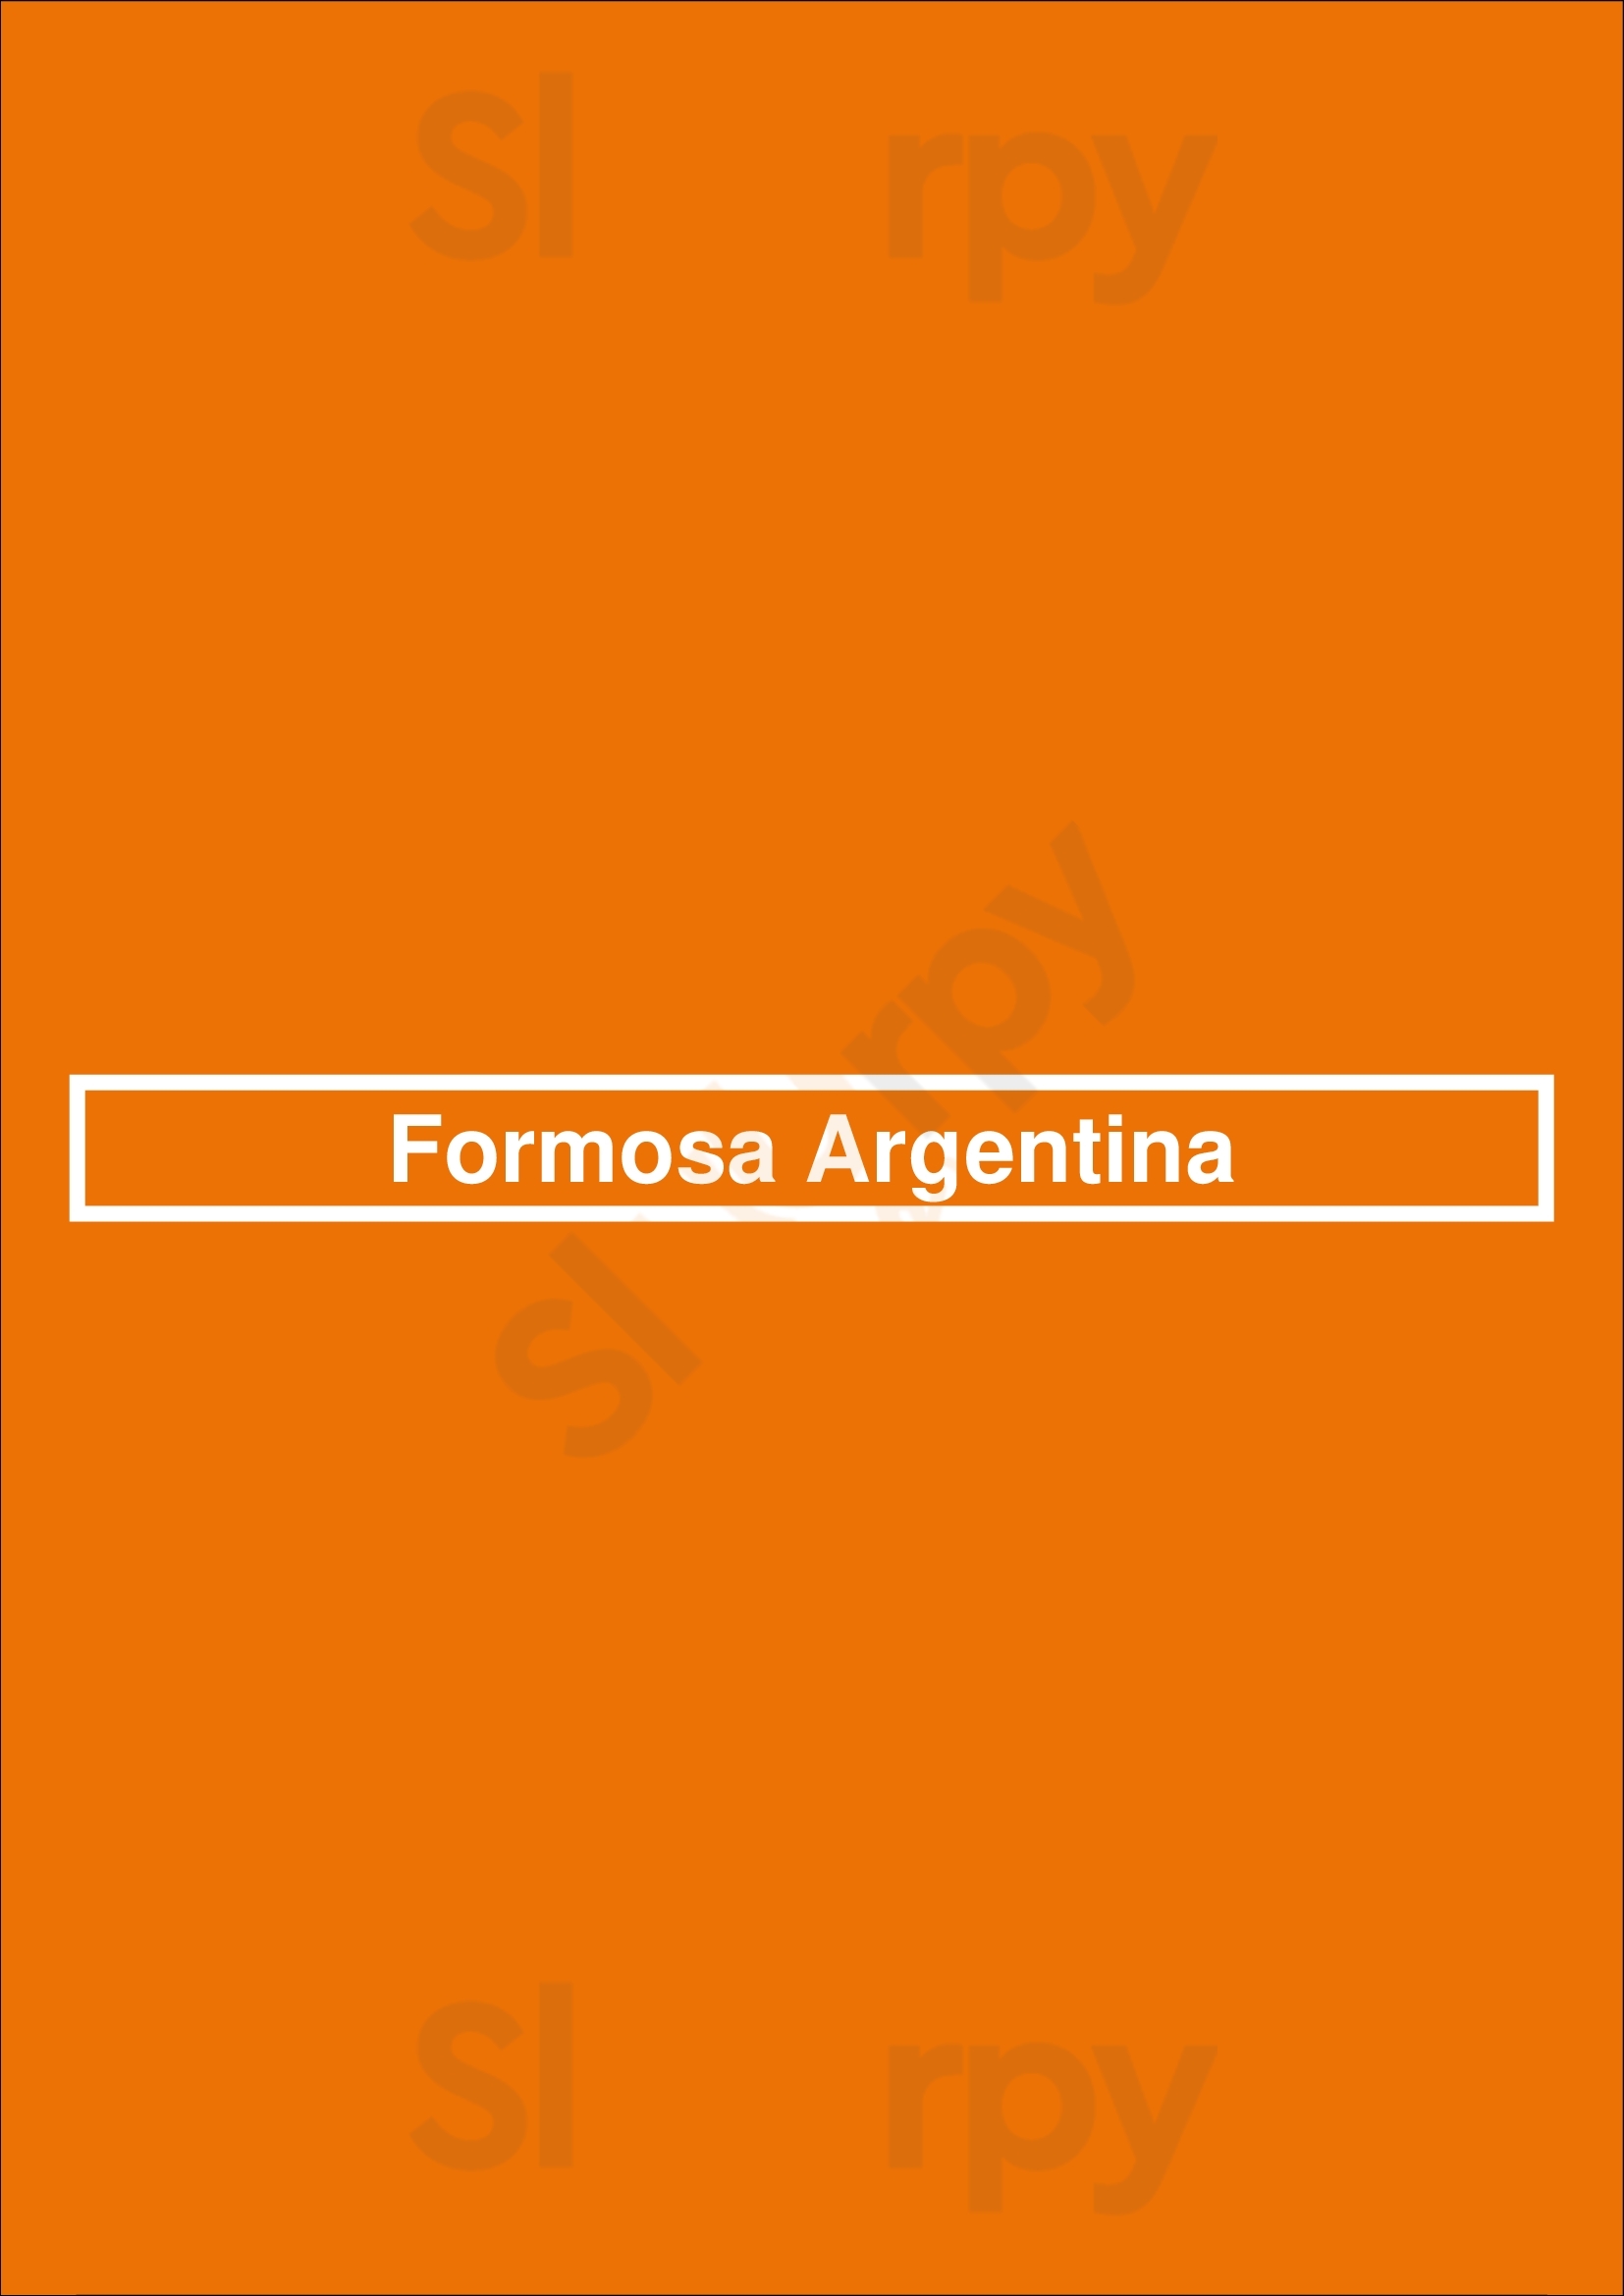 Formosa Argentina Amsterdam Menu - 1